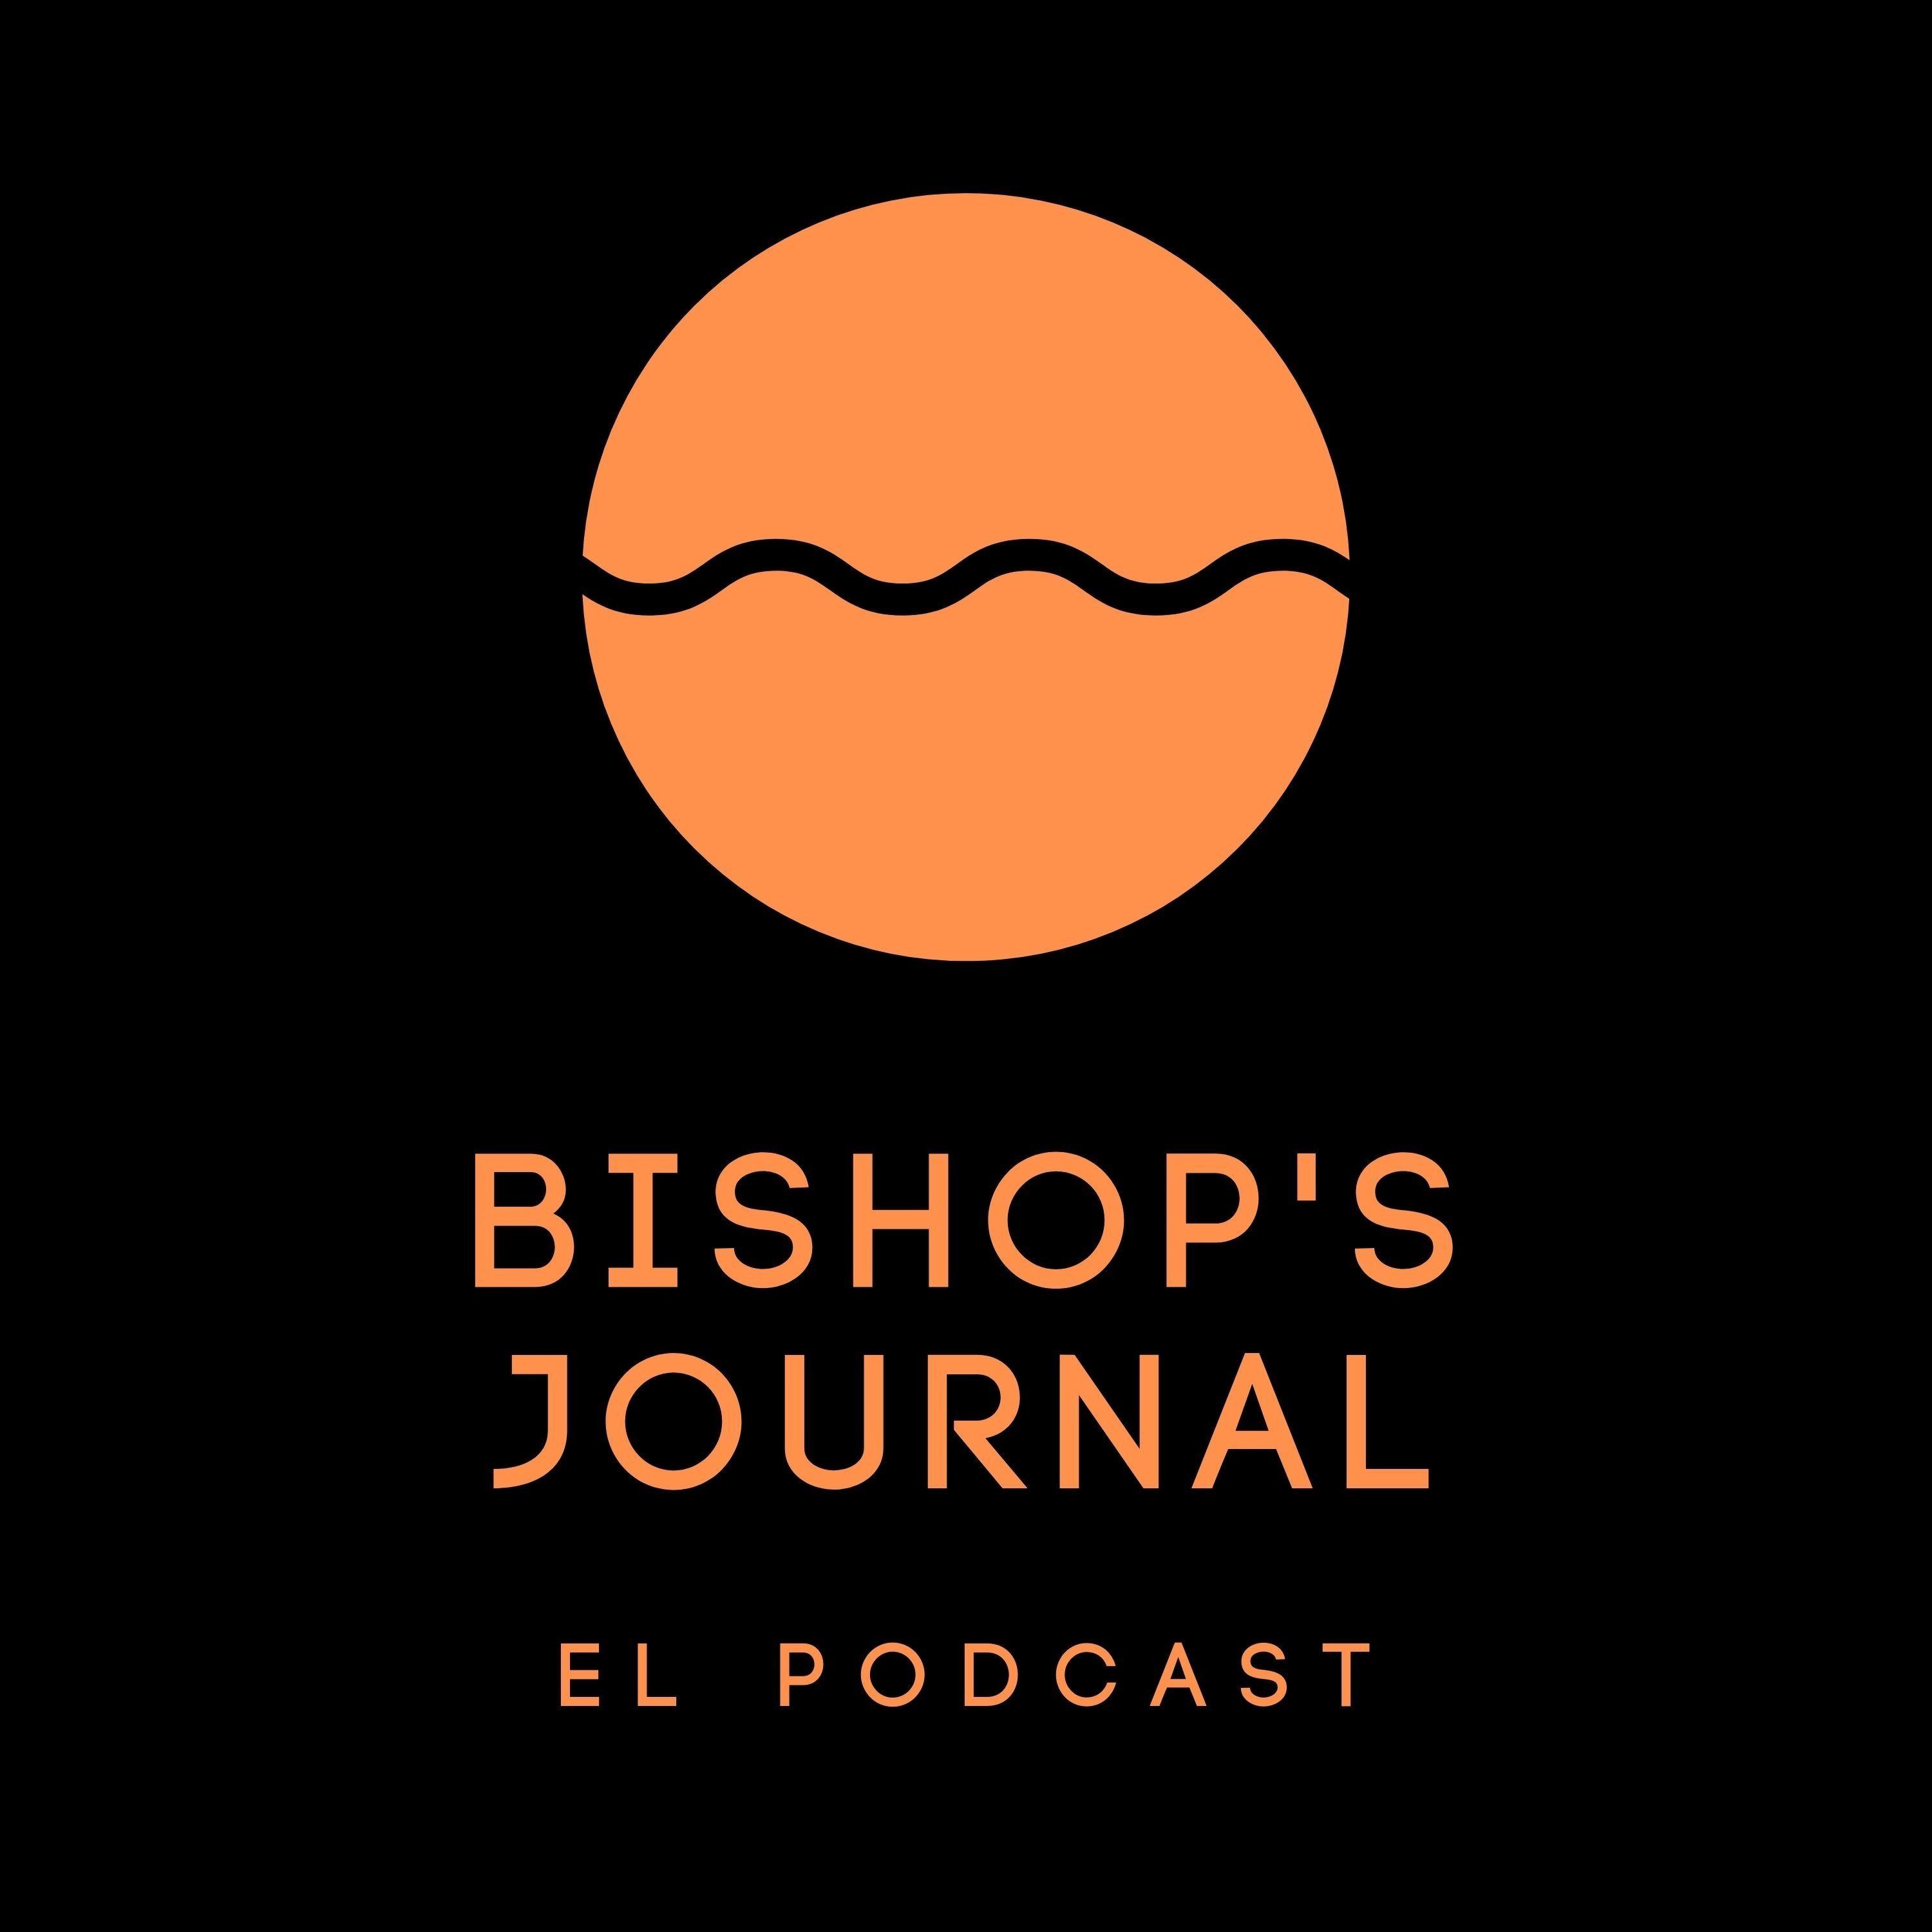 Bishop's Journal el Podcast